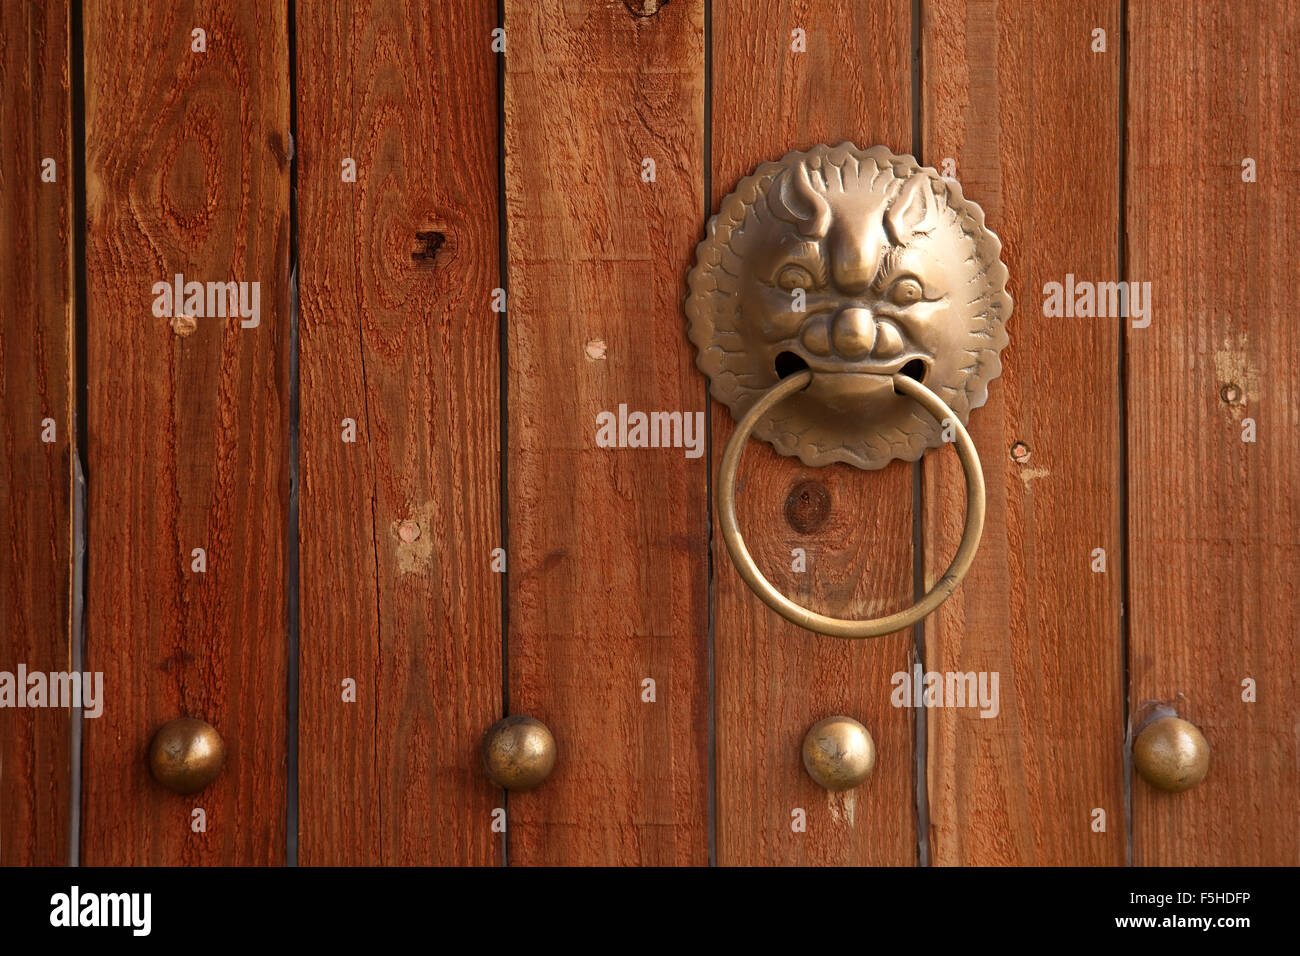 Chinese lion door knob Stock Photo